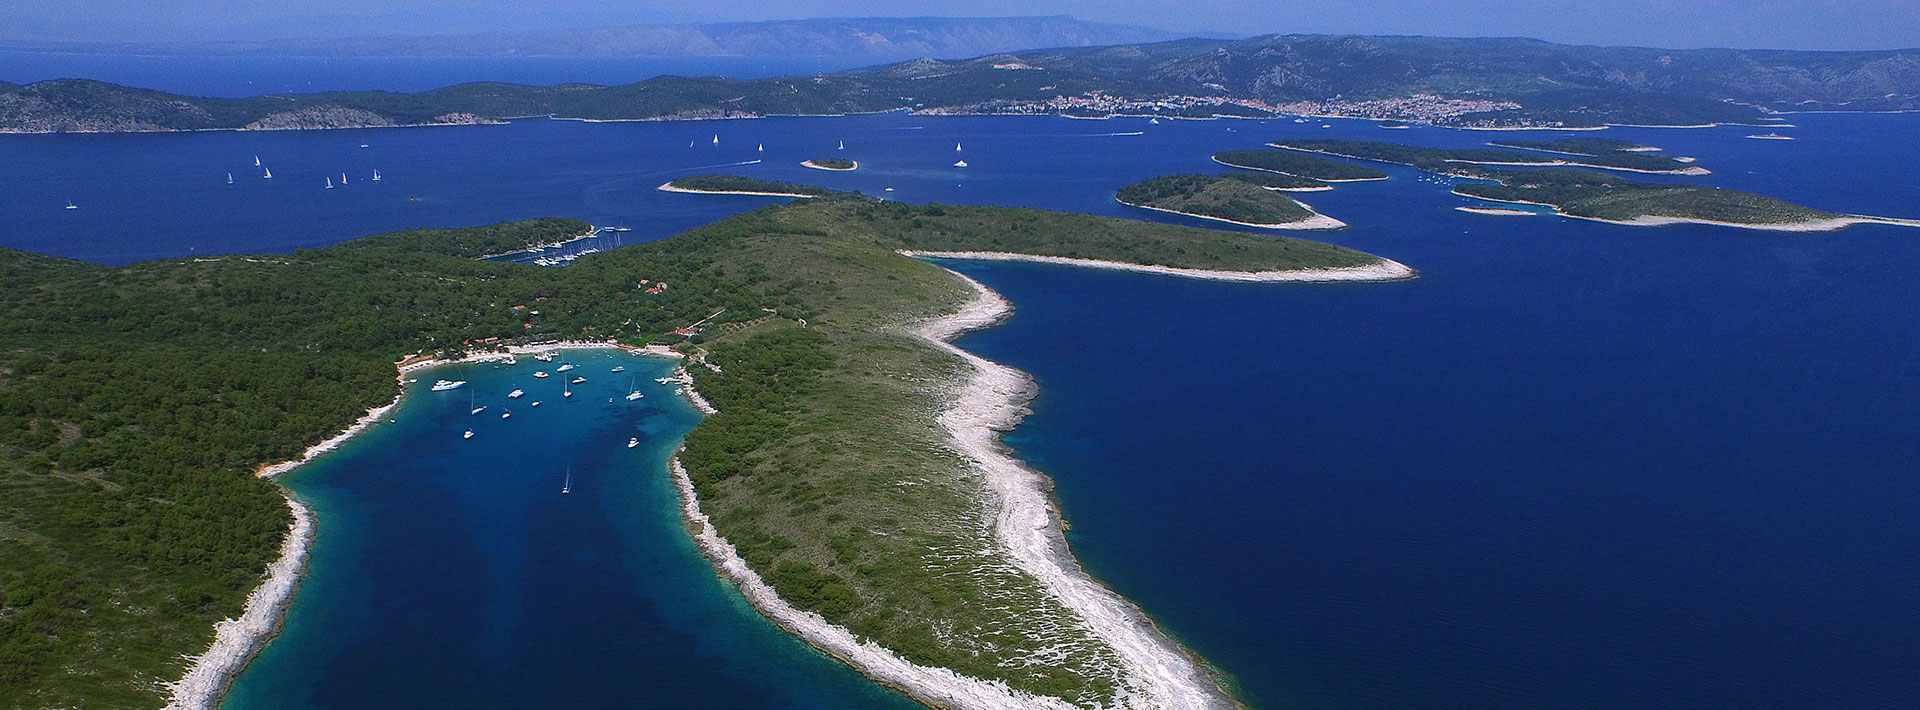 Pakleni islands, aerial view of the archipelago